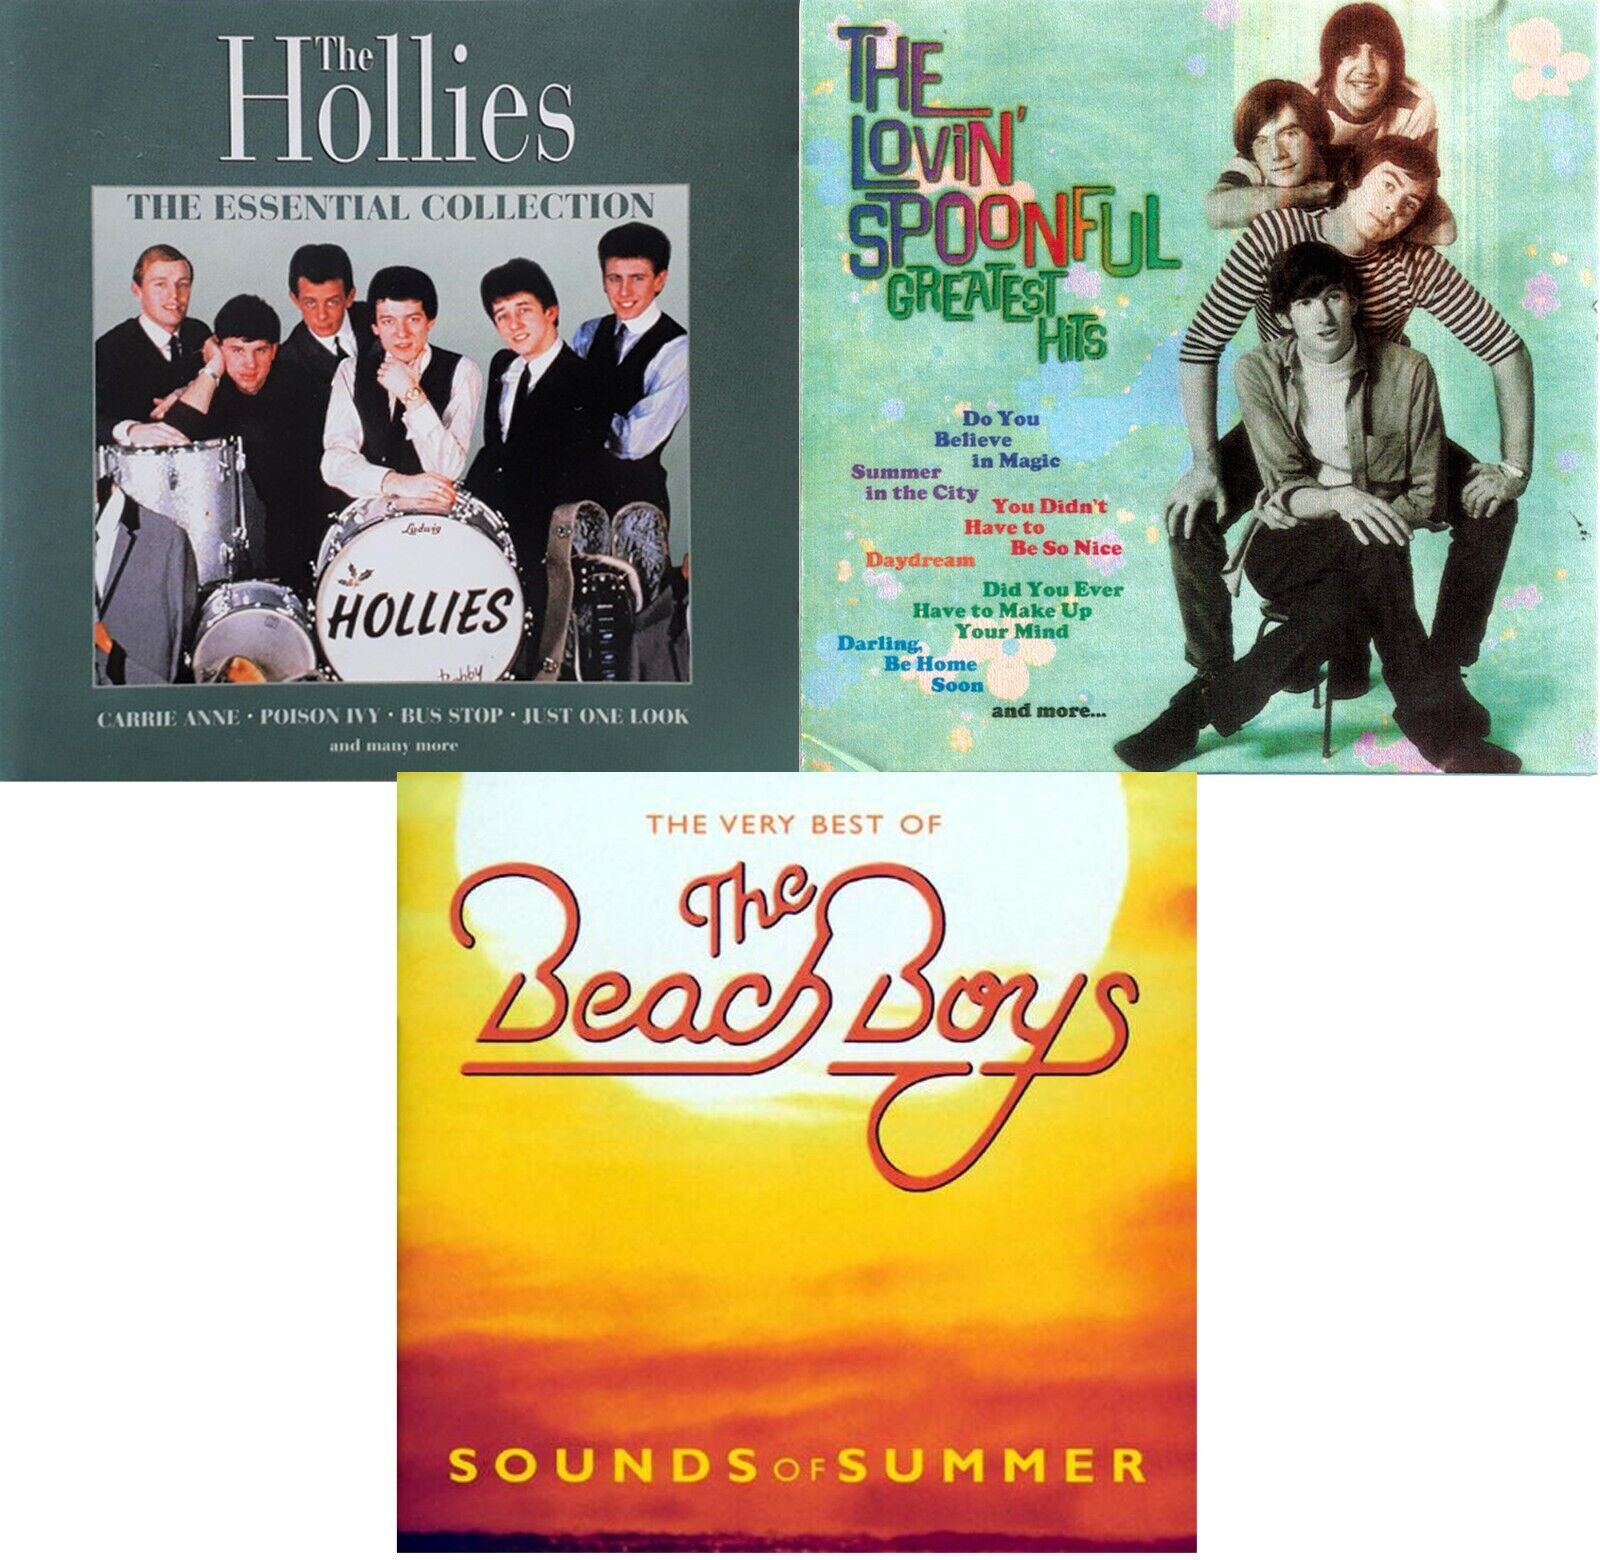 THE HOLLIES / LOVIN' SPOONFUL / BEACH BOYS: 3-CD Lot * FREE SHIPPING!!